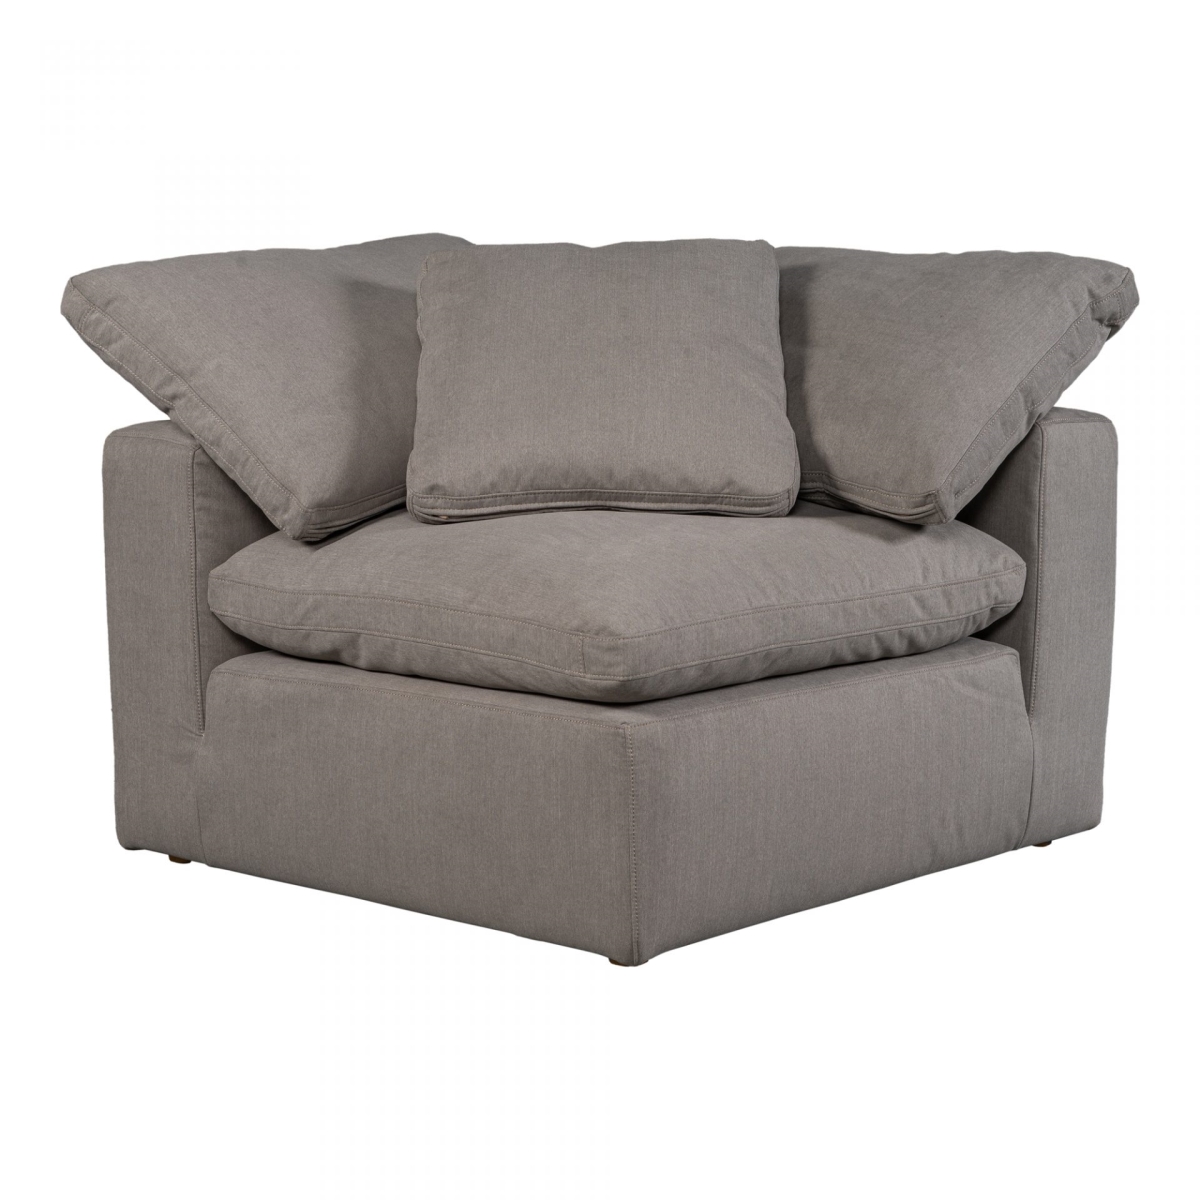 Yj-1012-29 38 X 38 X 32 In. Terra Condo Corner Chair Livesmart Fabric, Light Grey